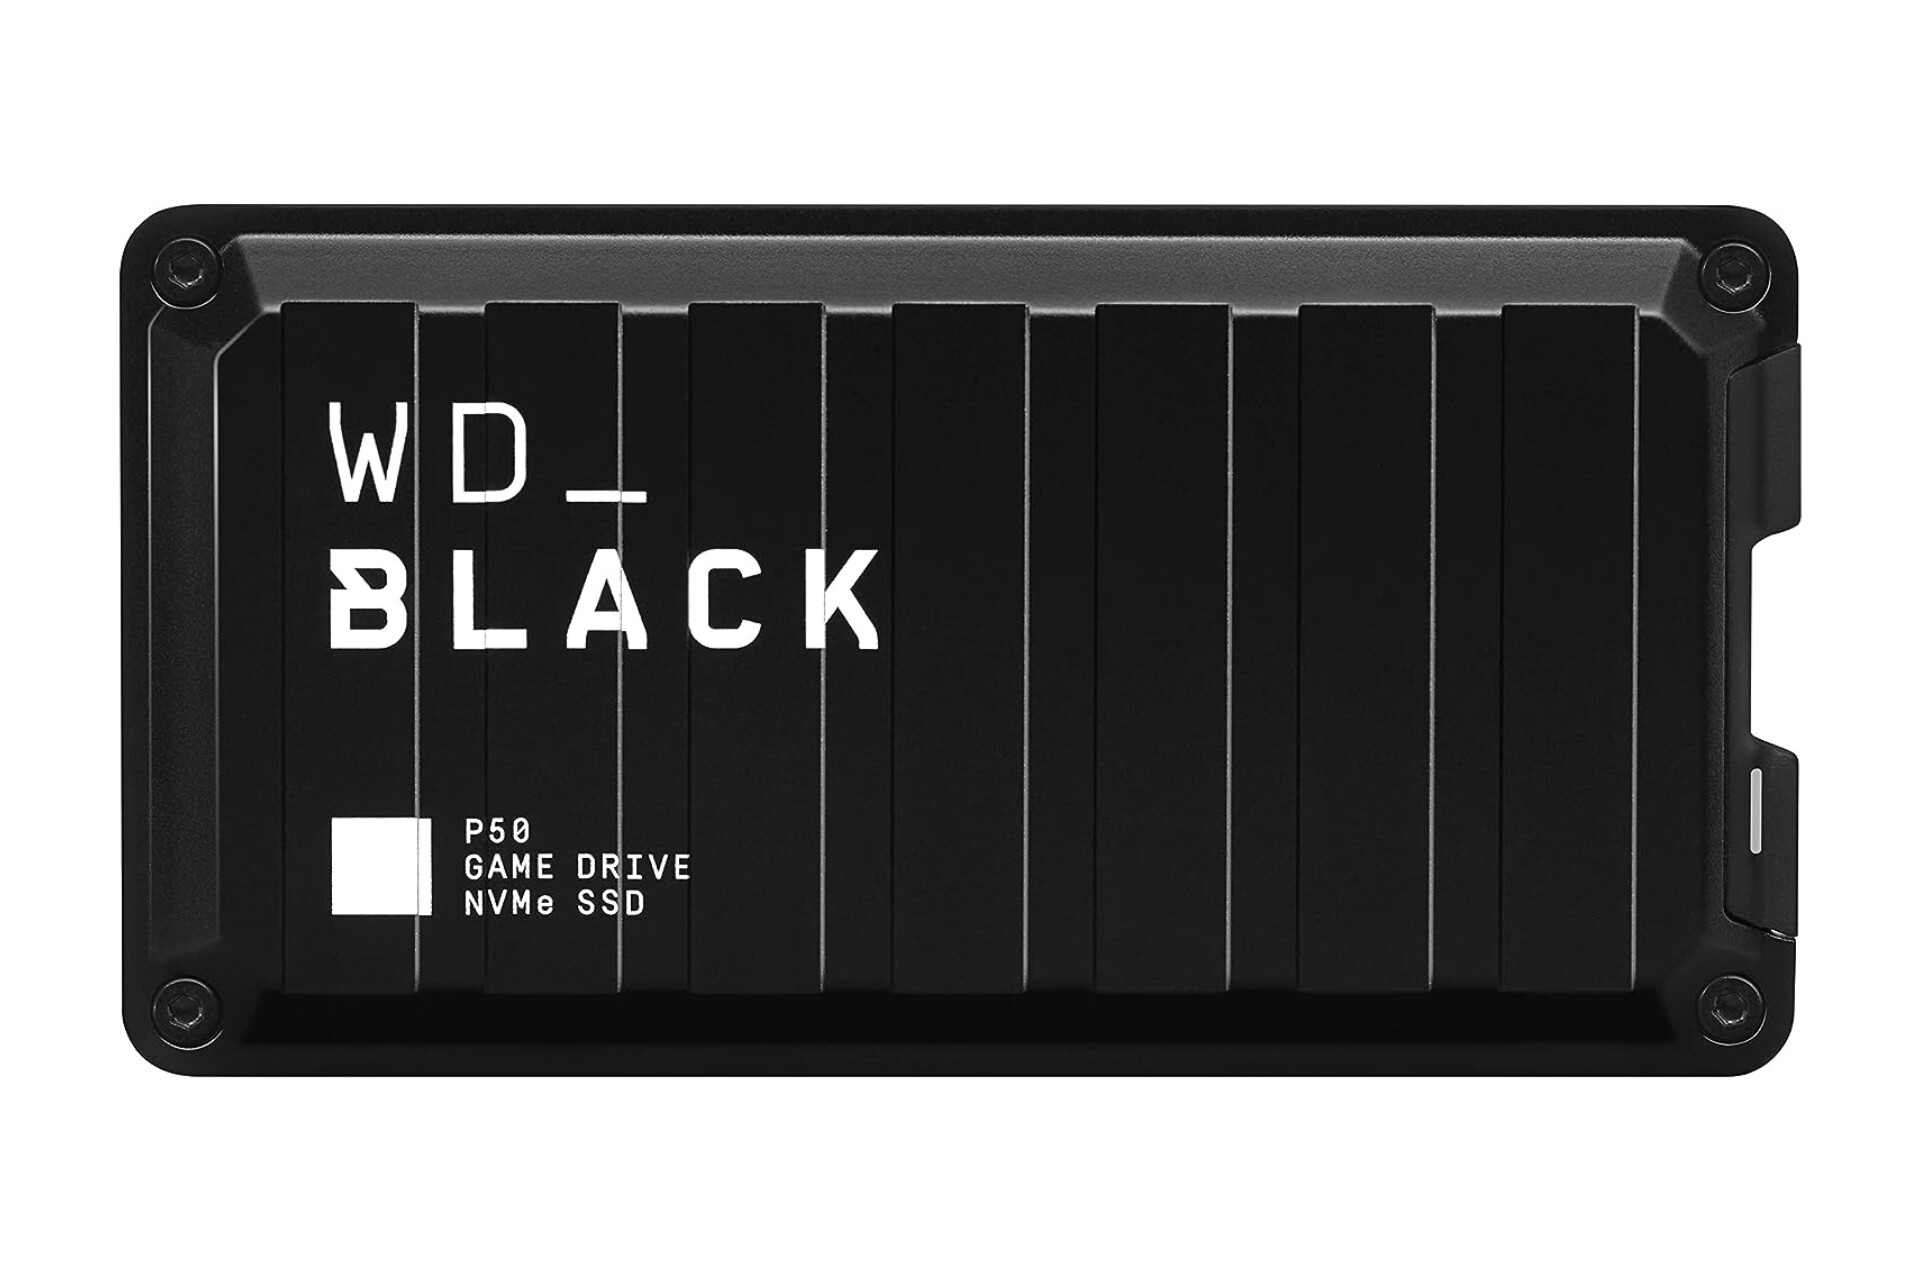 WD_BLACK P50